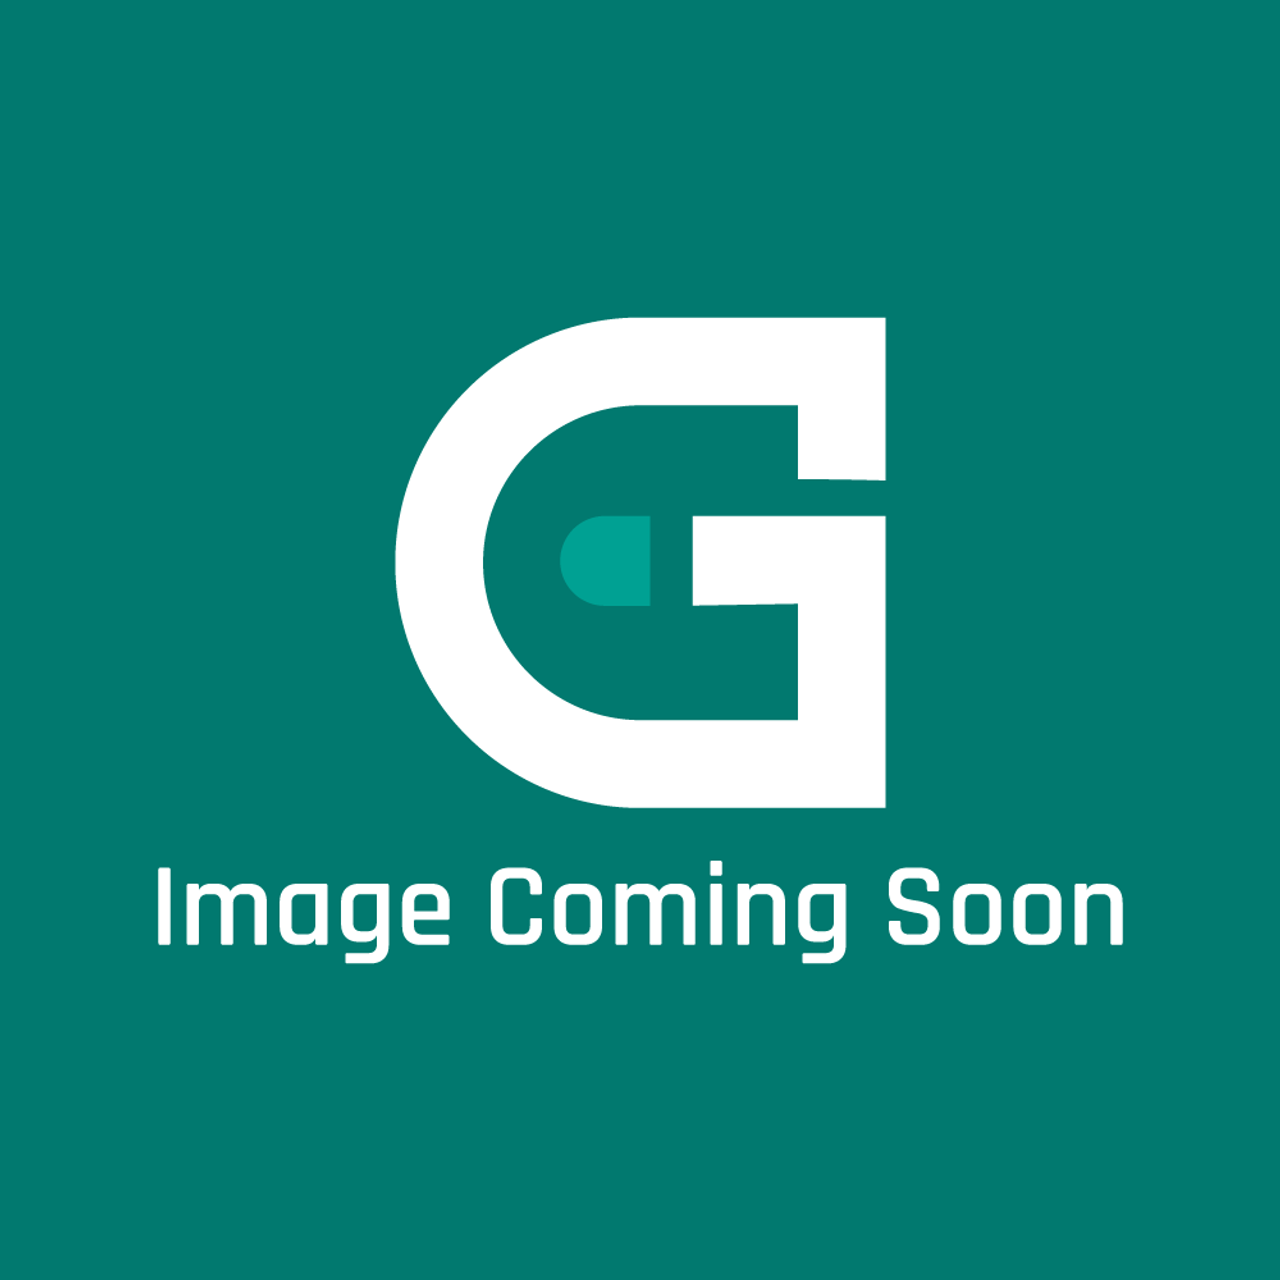 Frigidaire - Electrolux 5304501062 Bulkhead - Image Coming Soon!